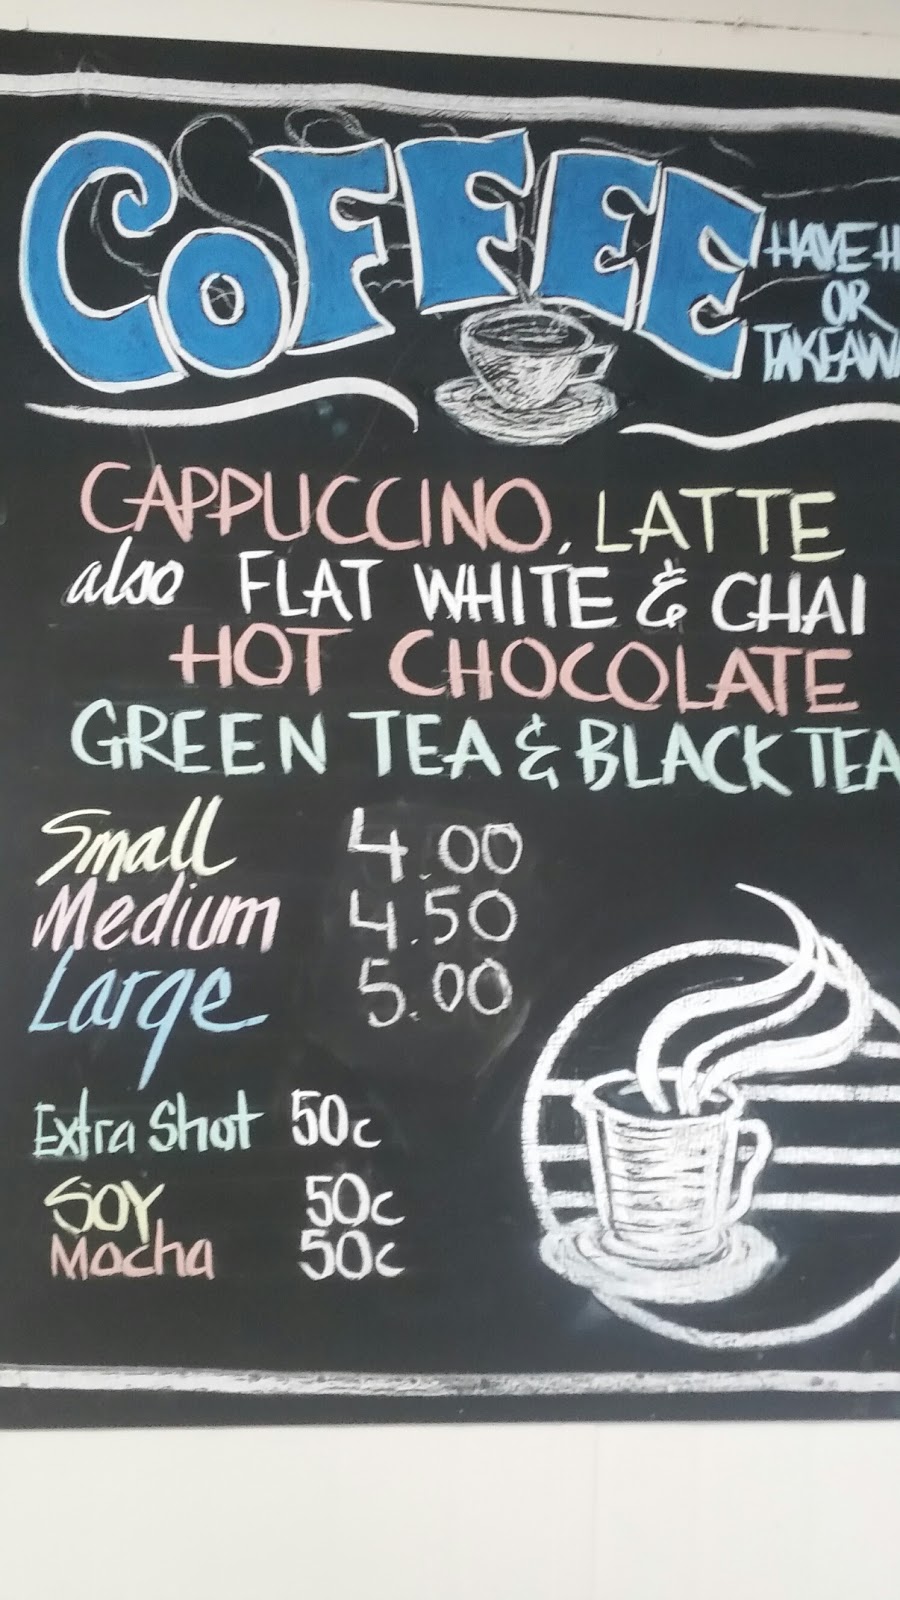 Kellys Coffee & Takeaway | cafe | 101 Mount Ettalong Rd, Umina Beach NSW 2257, Australia | 0410721180 OR +61 410 721 180